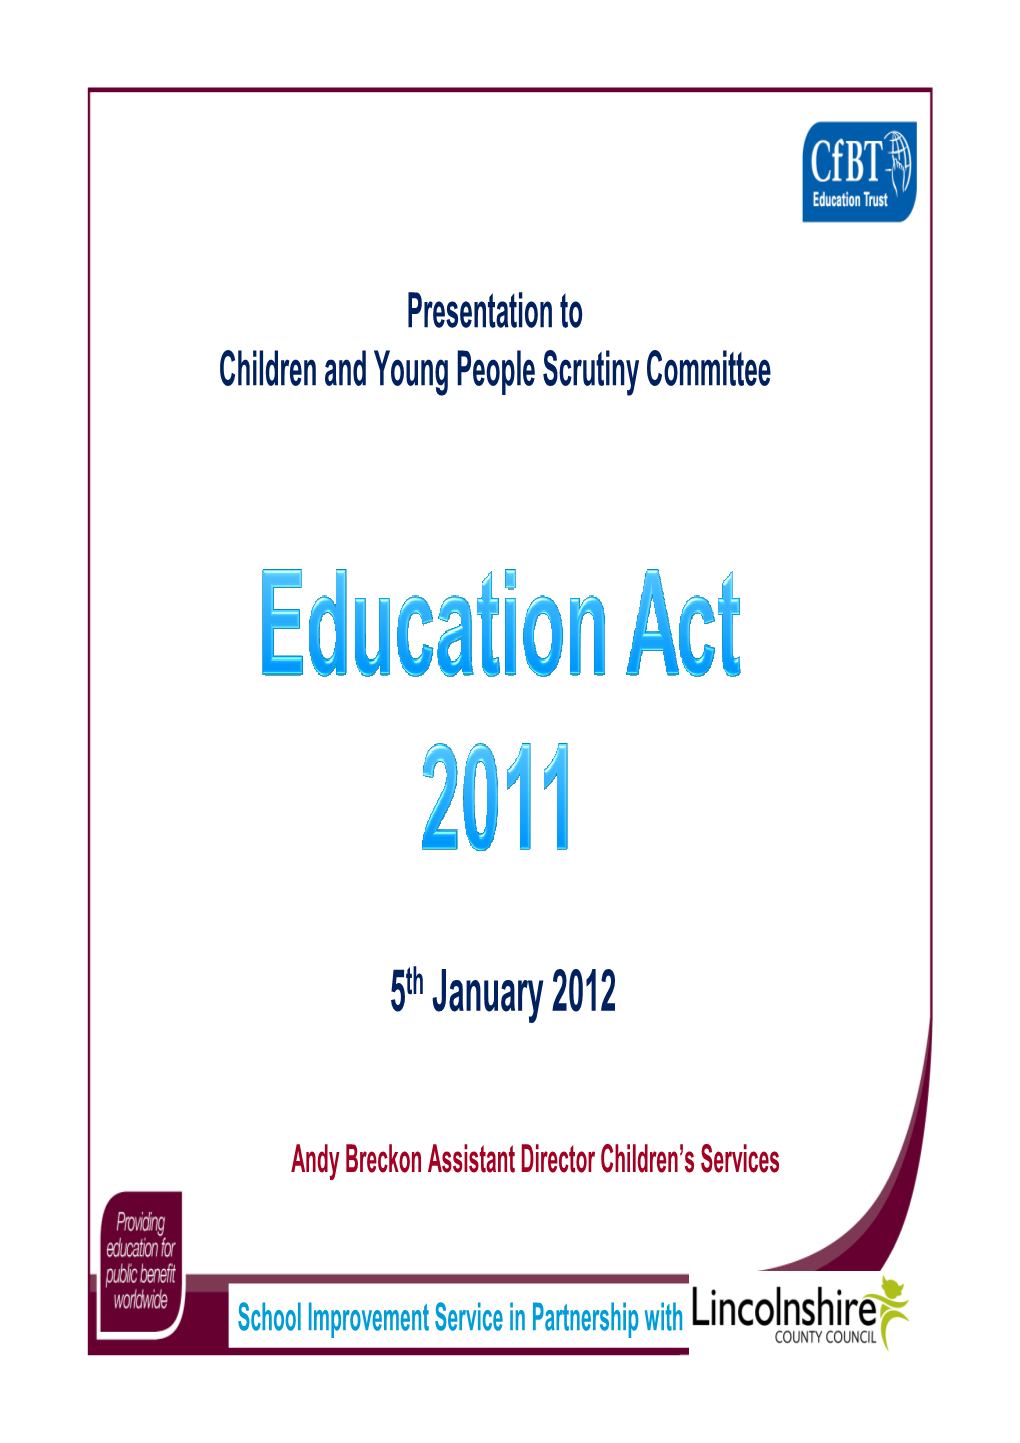 Education Act Presentation